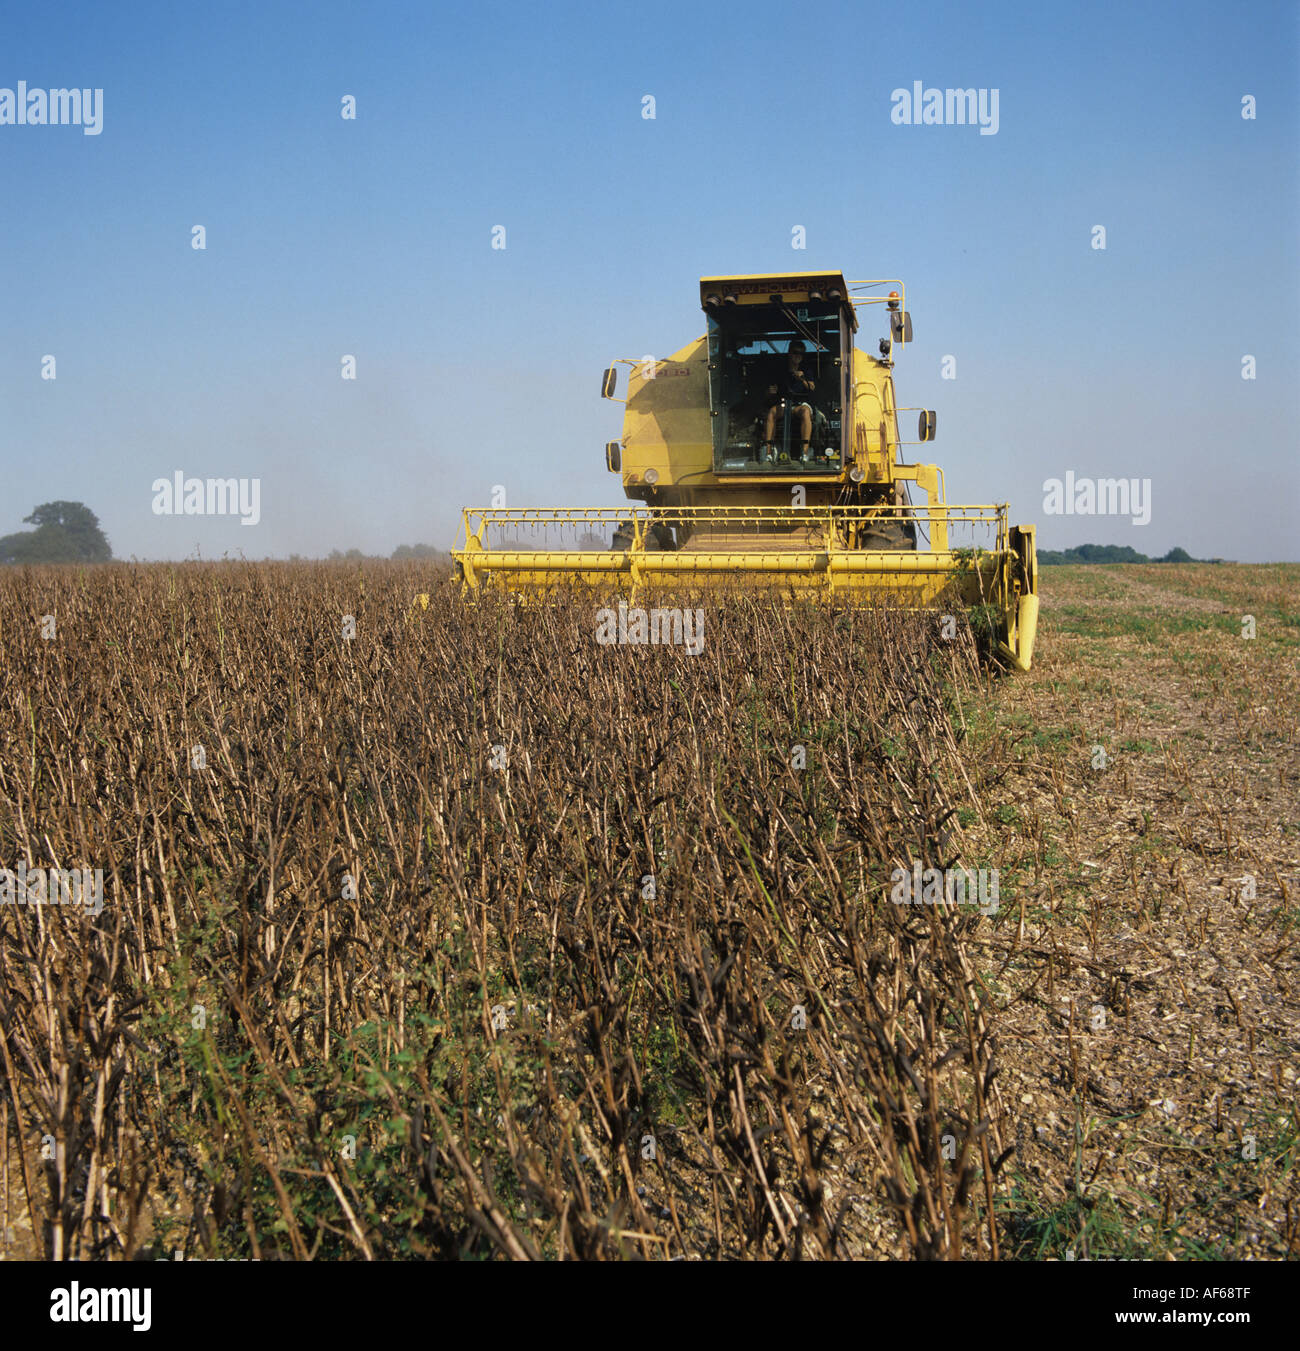 New Holland combine harvesting ripe field bean crop Stock Photo